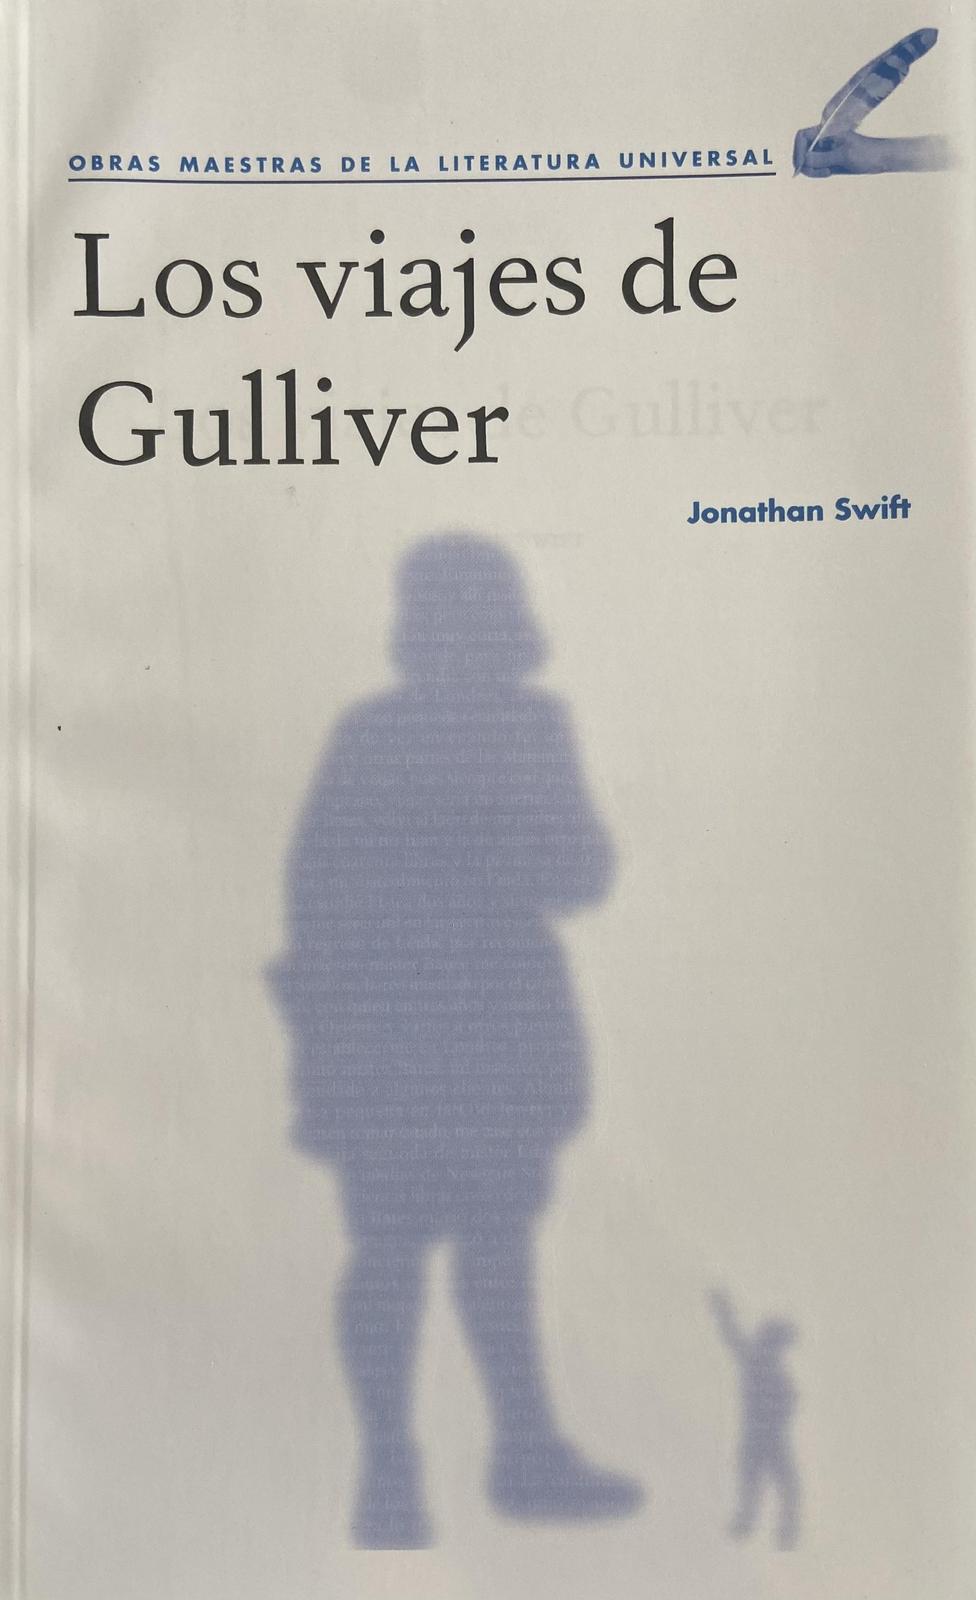 Jonathan Swift: Los viajes de Gulliver (Spanish language, 2020, Agencia Promotora de Publicaciones, S.A. de C.V.)